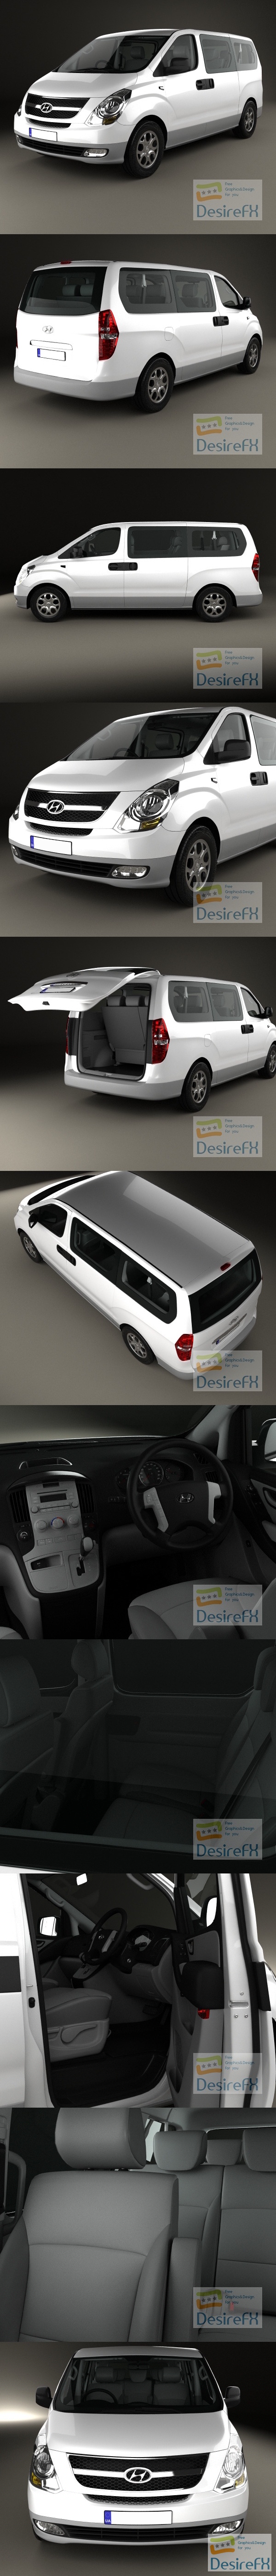 Hyundai iMax with HQ interior 2010 3D Model